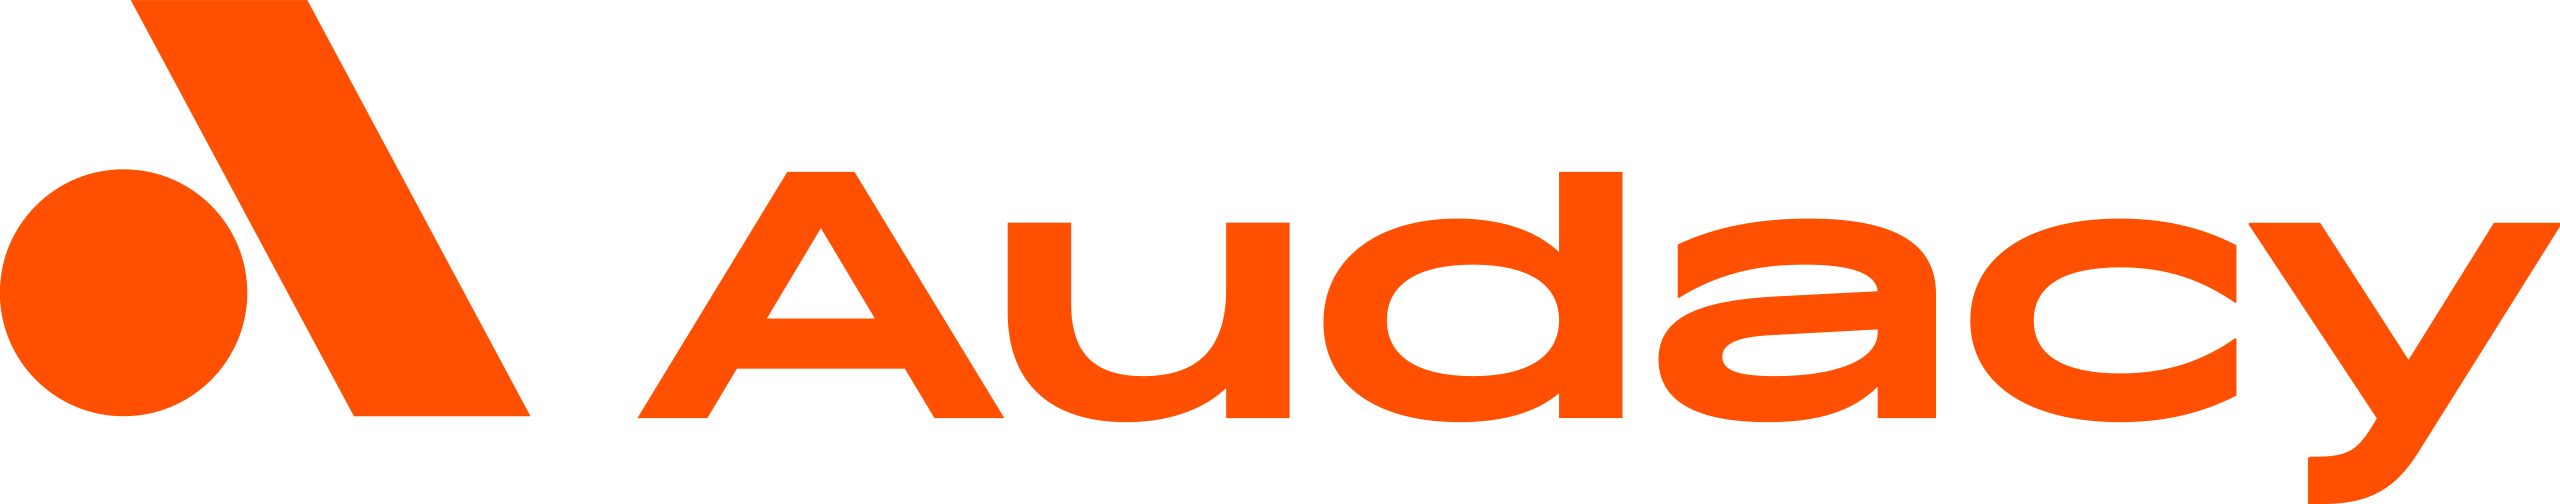 Audacy_logo.svg